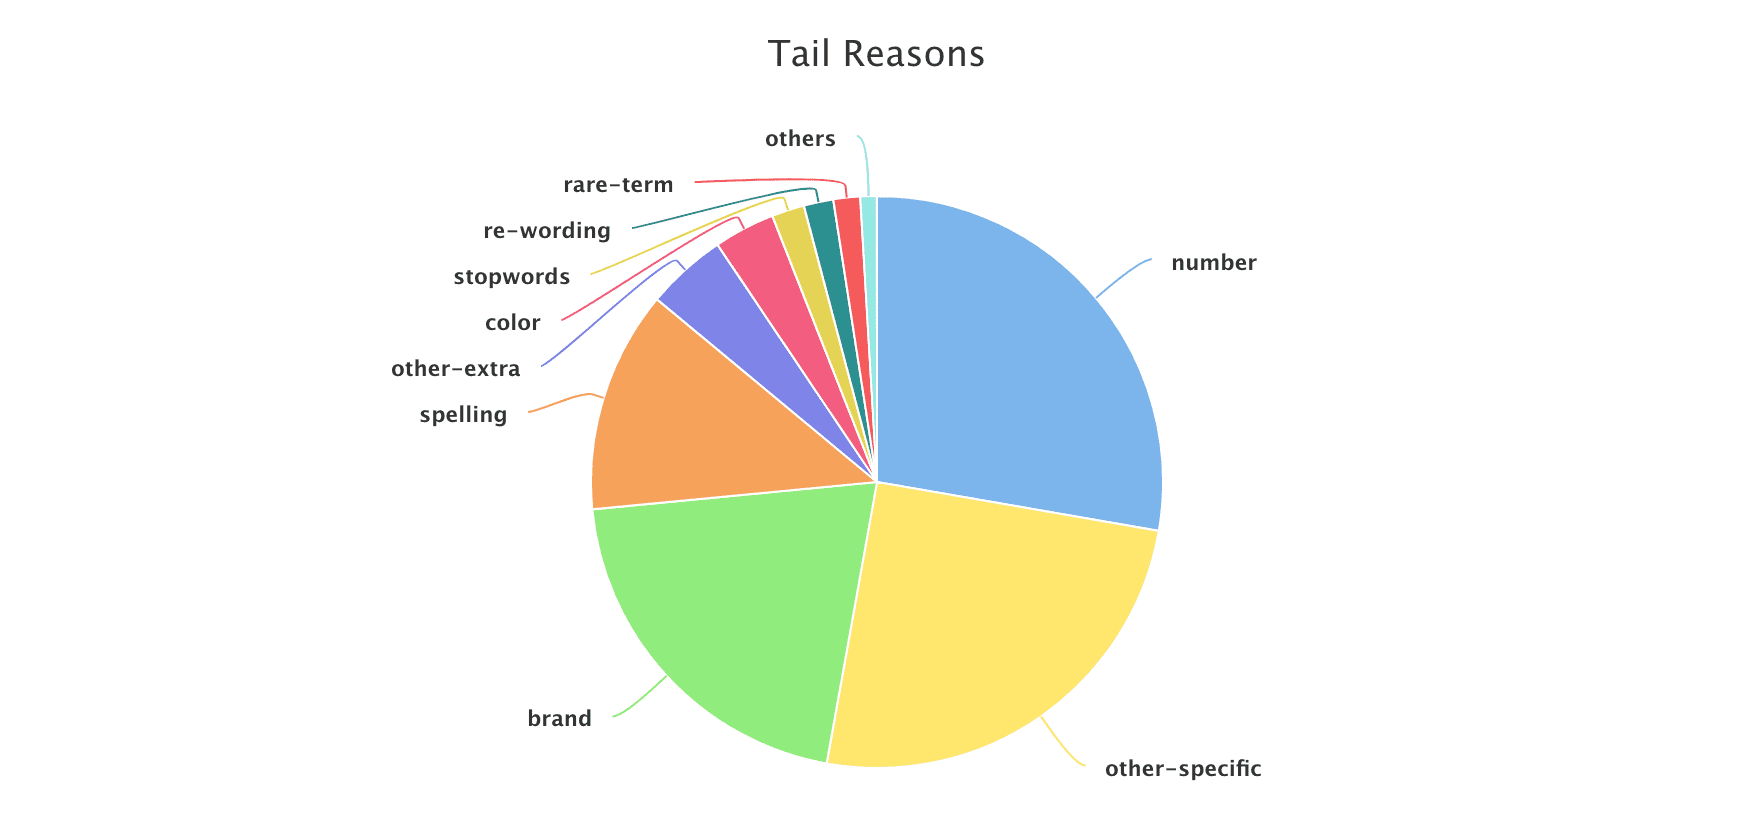 Tail Reasons pie chart